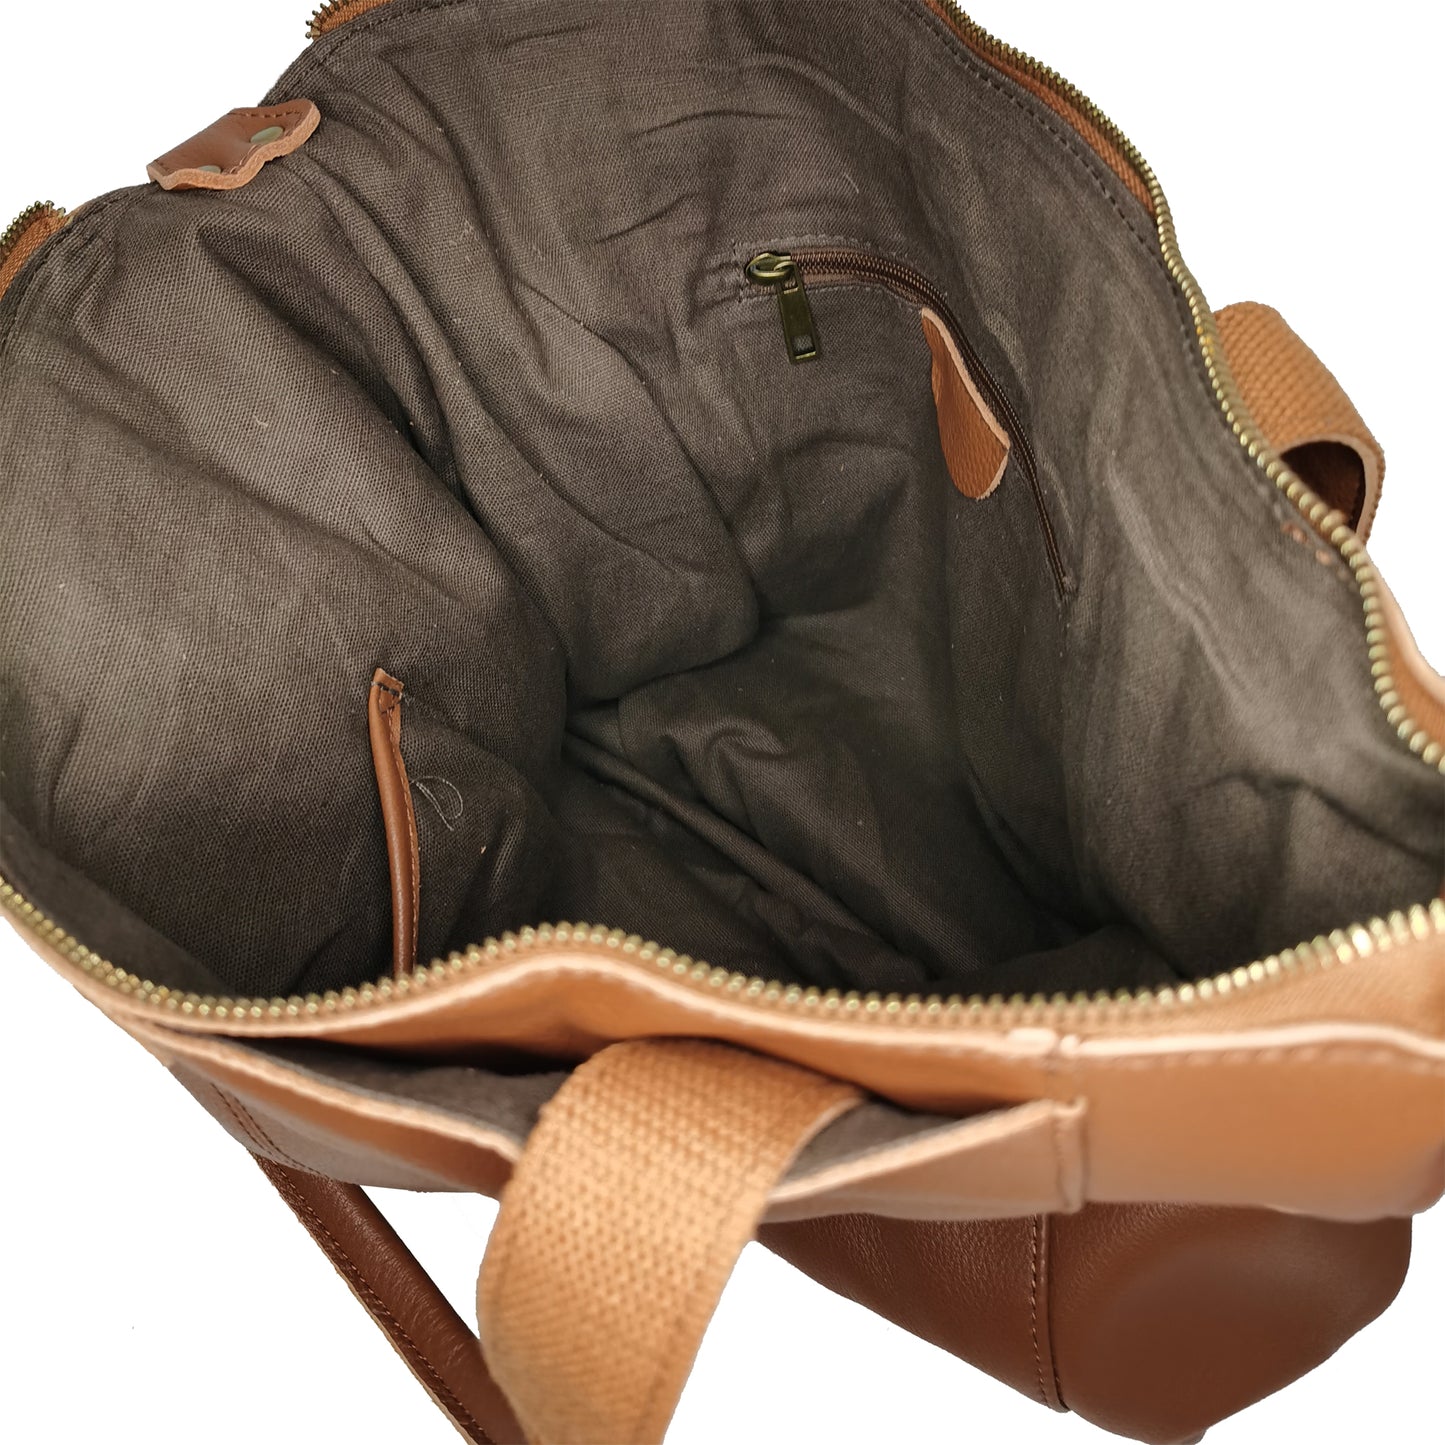 Unisex Men's and Women's genuine cowhide leather handbag Cara V2 design